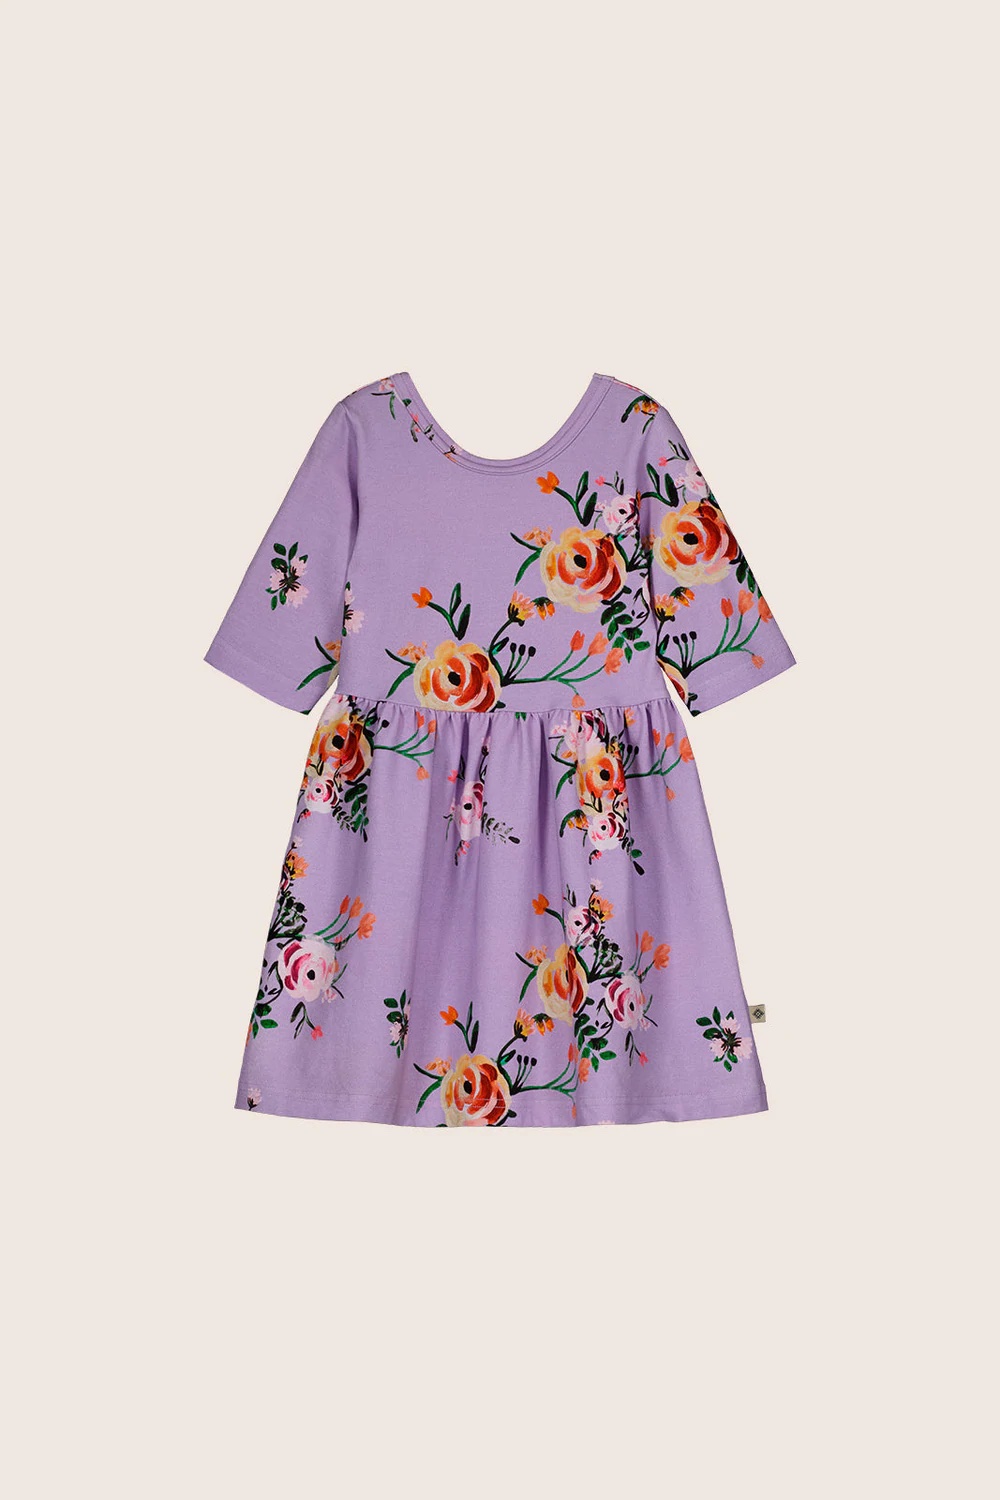 KAIKO - Kids Dress 3/4 - Lavender Bloom 5